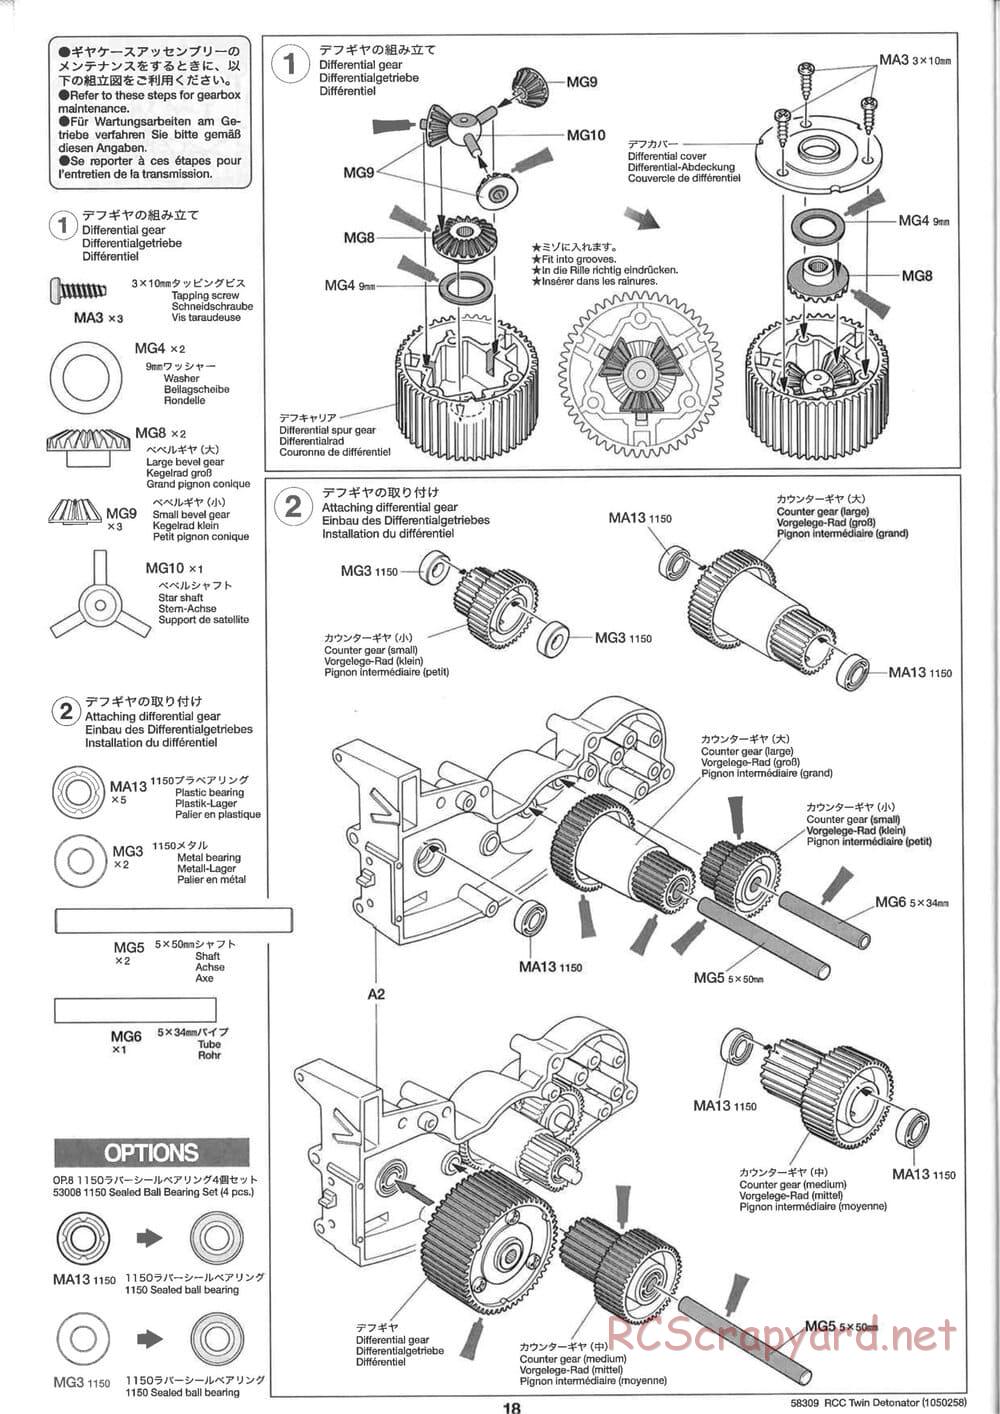 Tamiya - Twin Detonator - WR-01 Chassis - Manual - Page 18